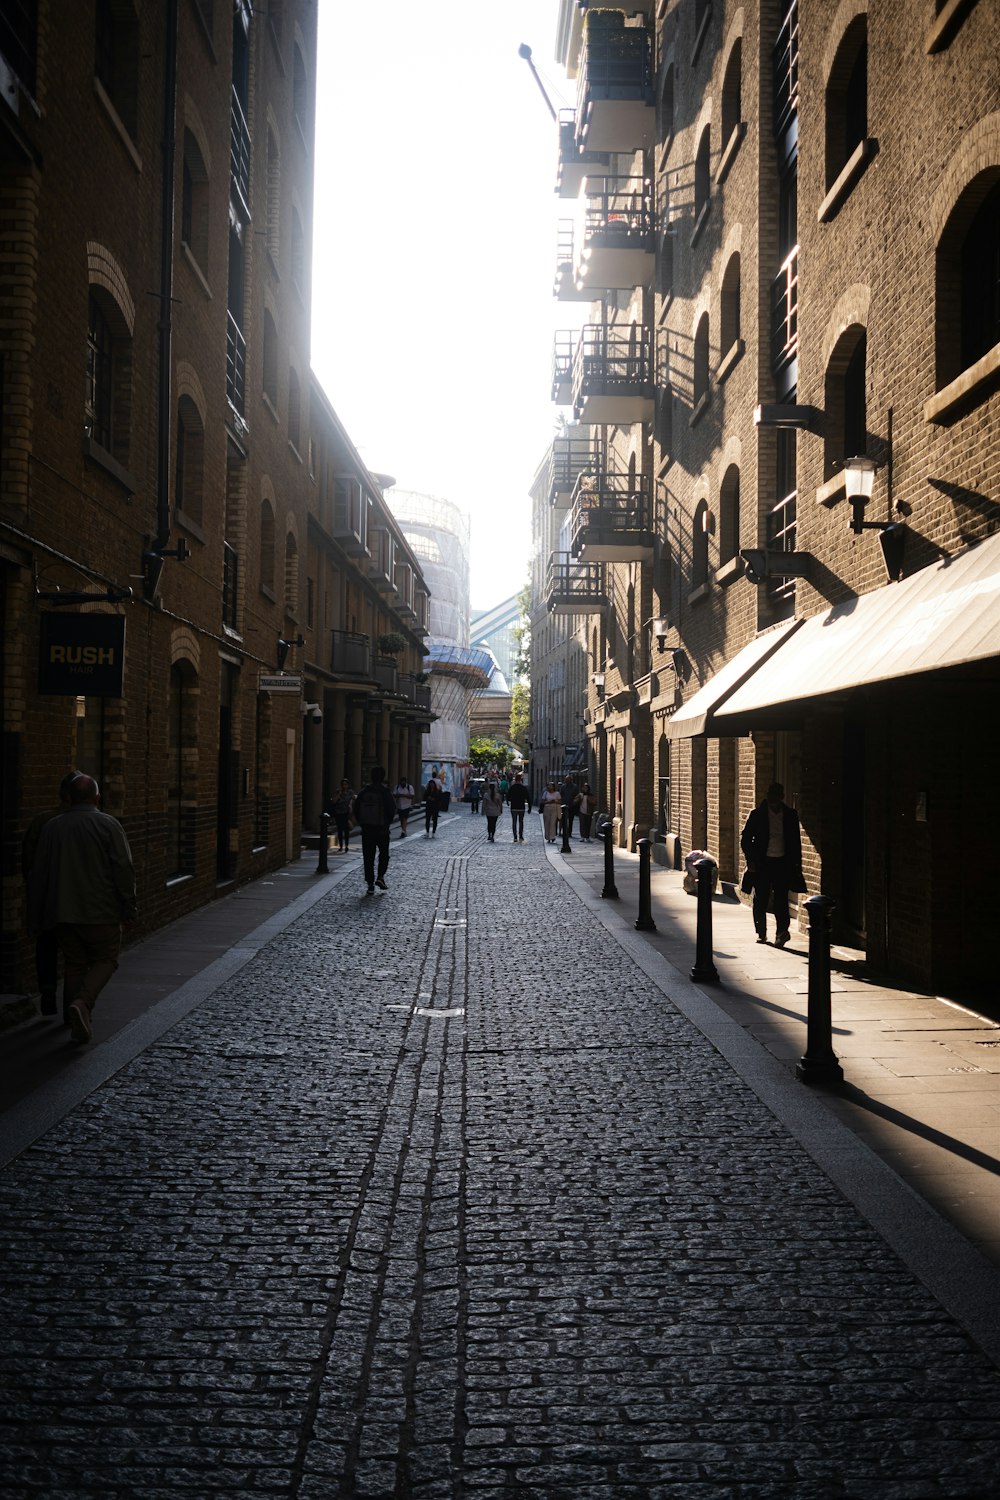 a cobblestone street with people walking down it